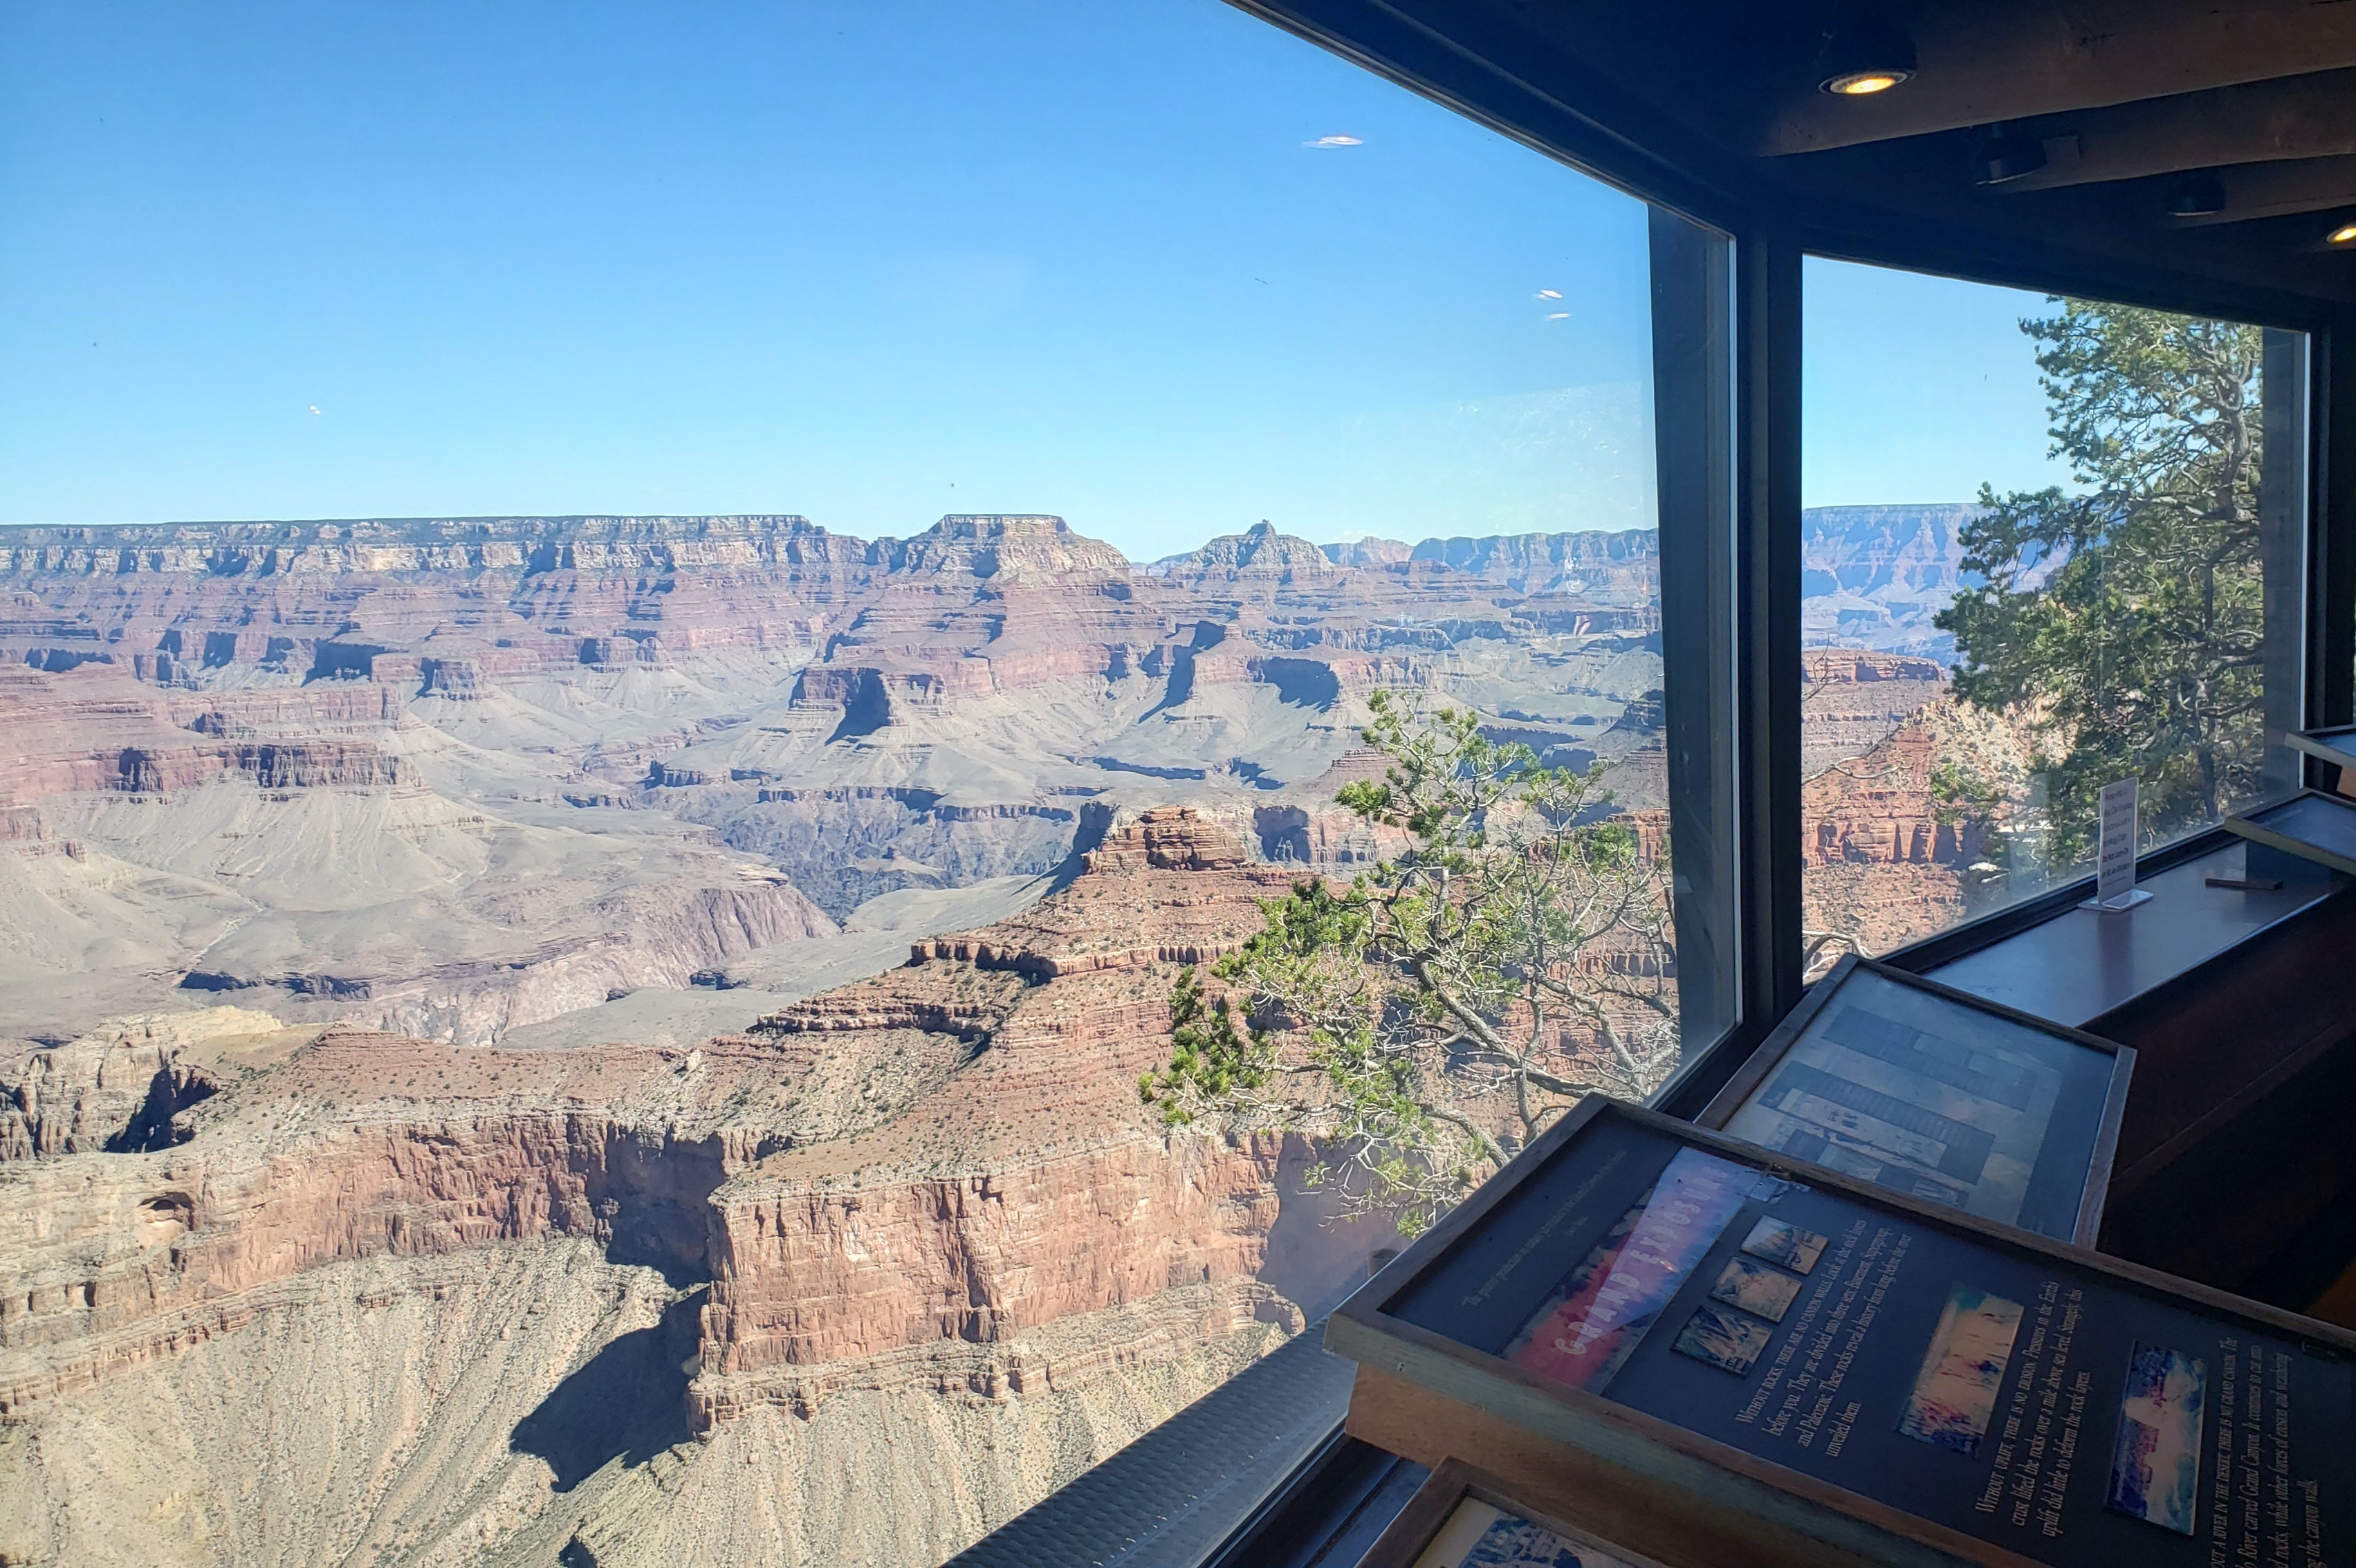 Yavapai Geology Museum has sprawling Grand Canyon views